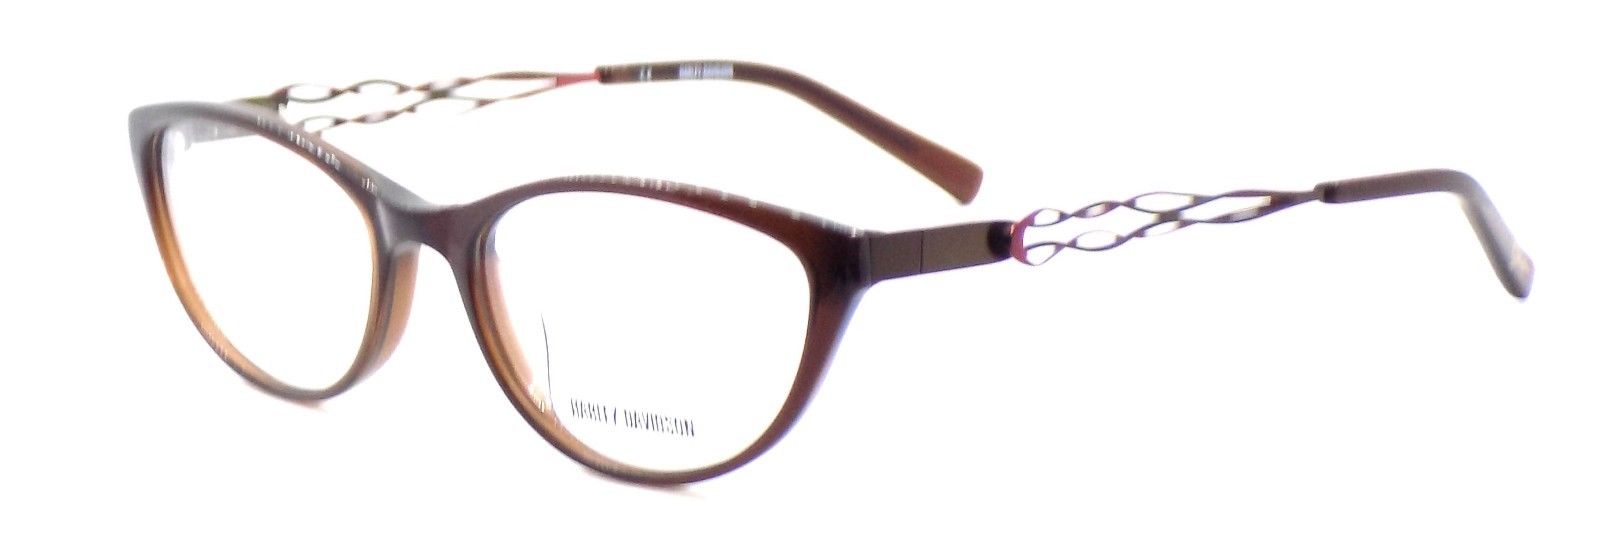 1-Harley Davidson HD513 BRN Women's Eyeglasses Frames 51-17-135 Brown + Case-715583766365-IKSpecs